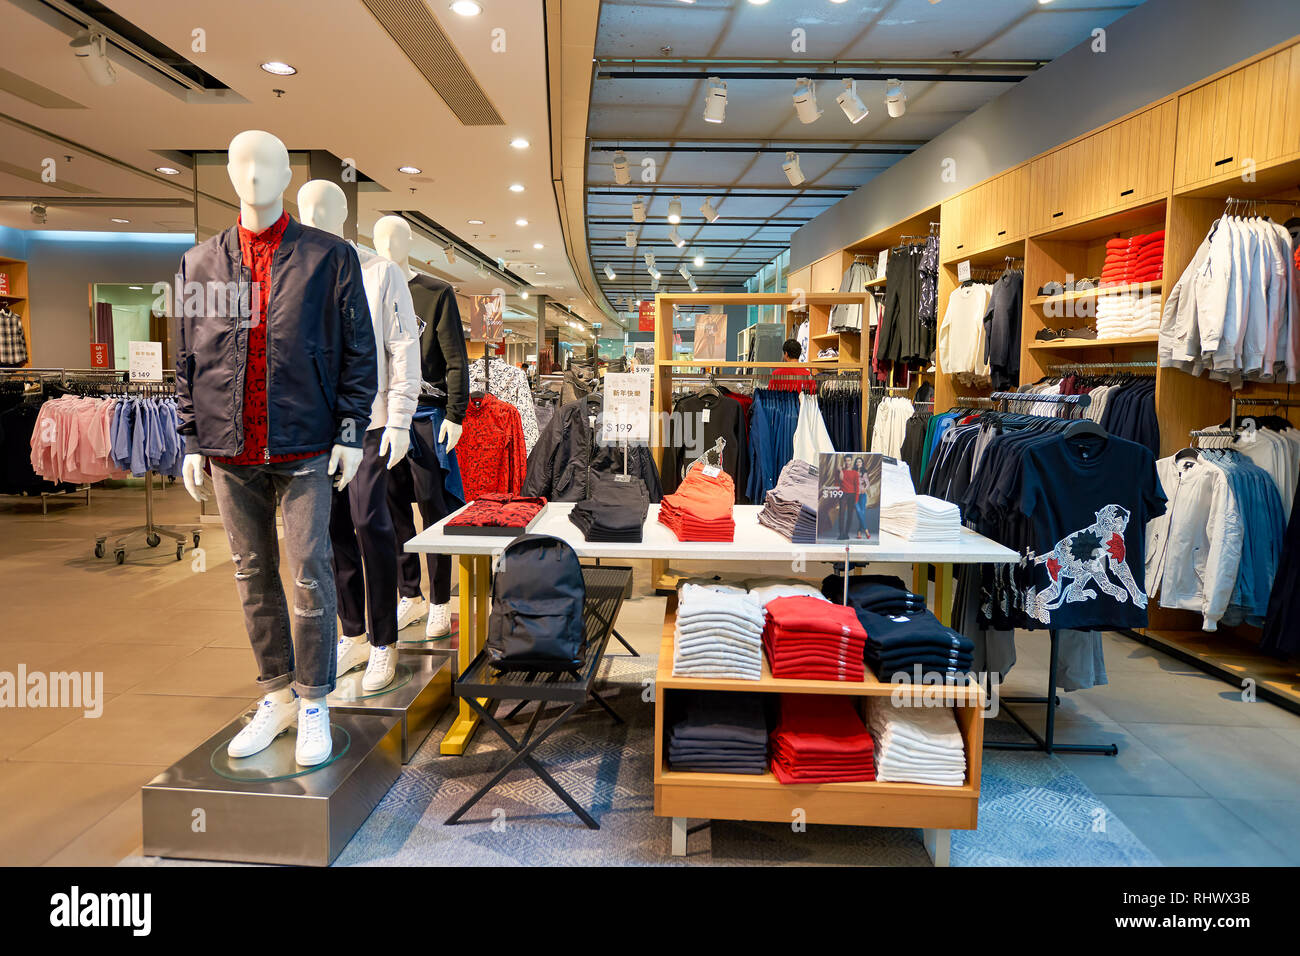 H&M commences China e-store - Inside Retail Asia